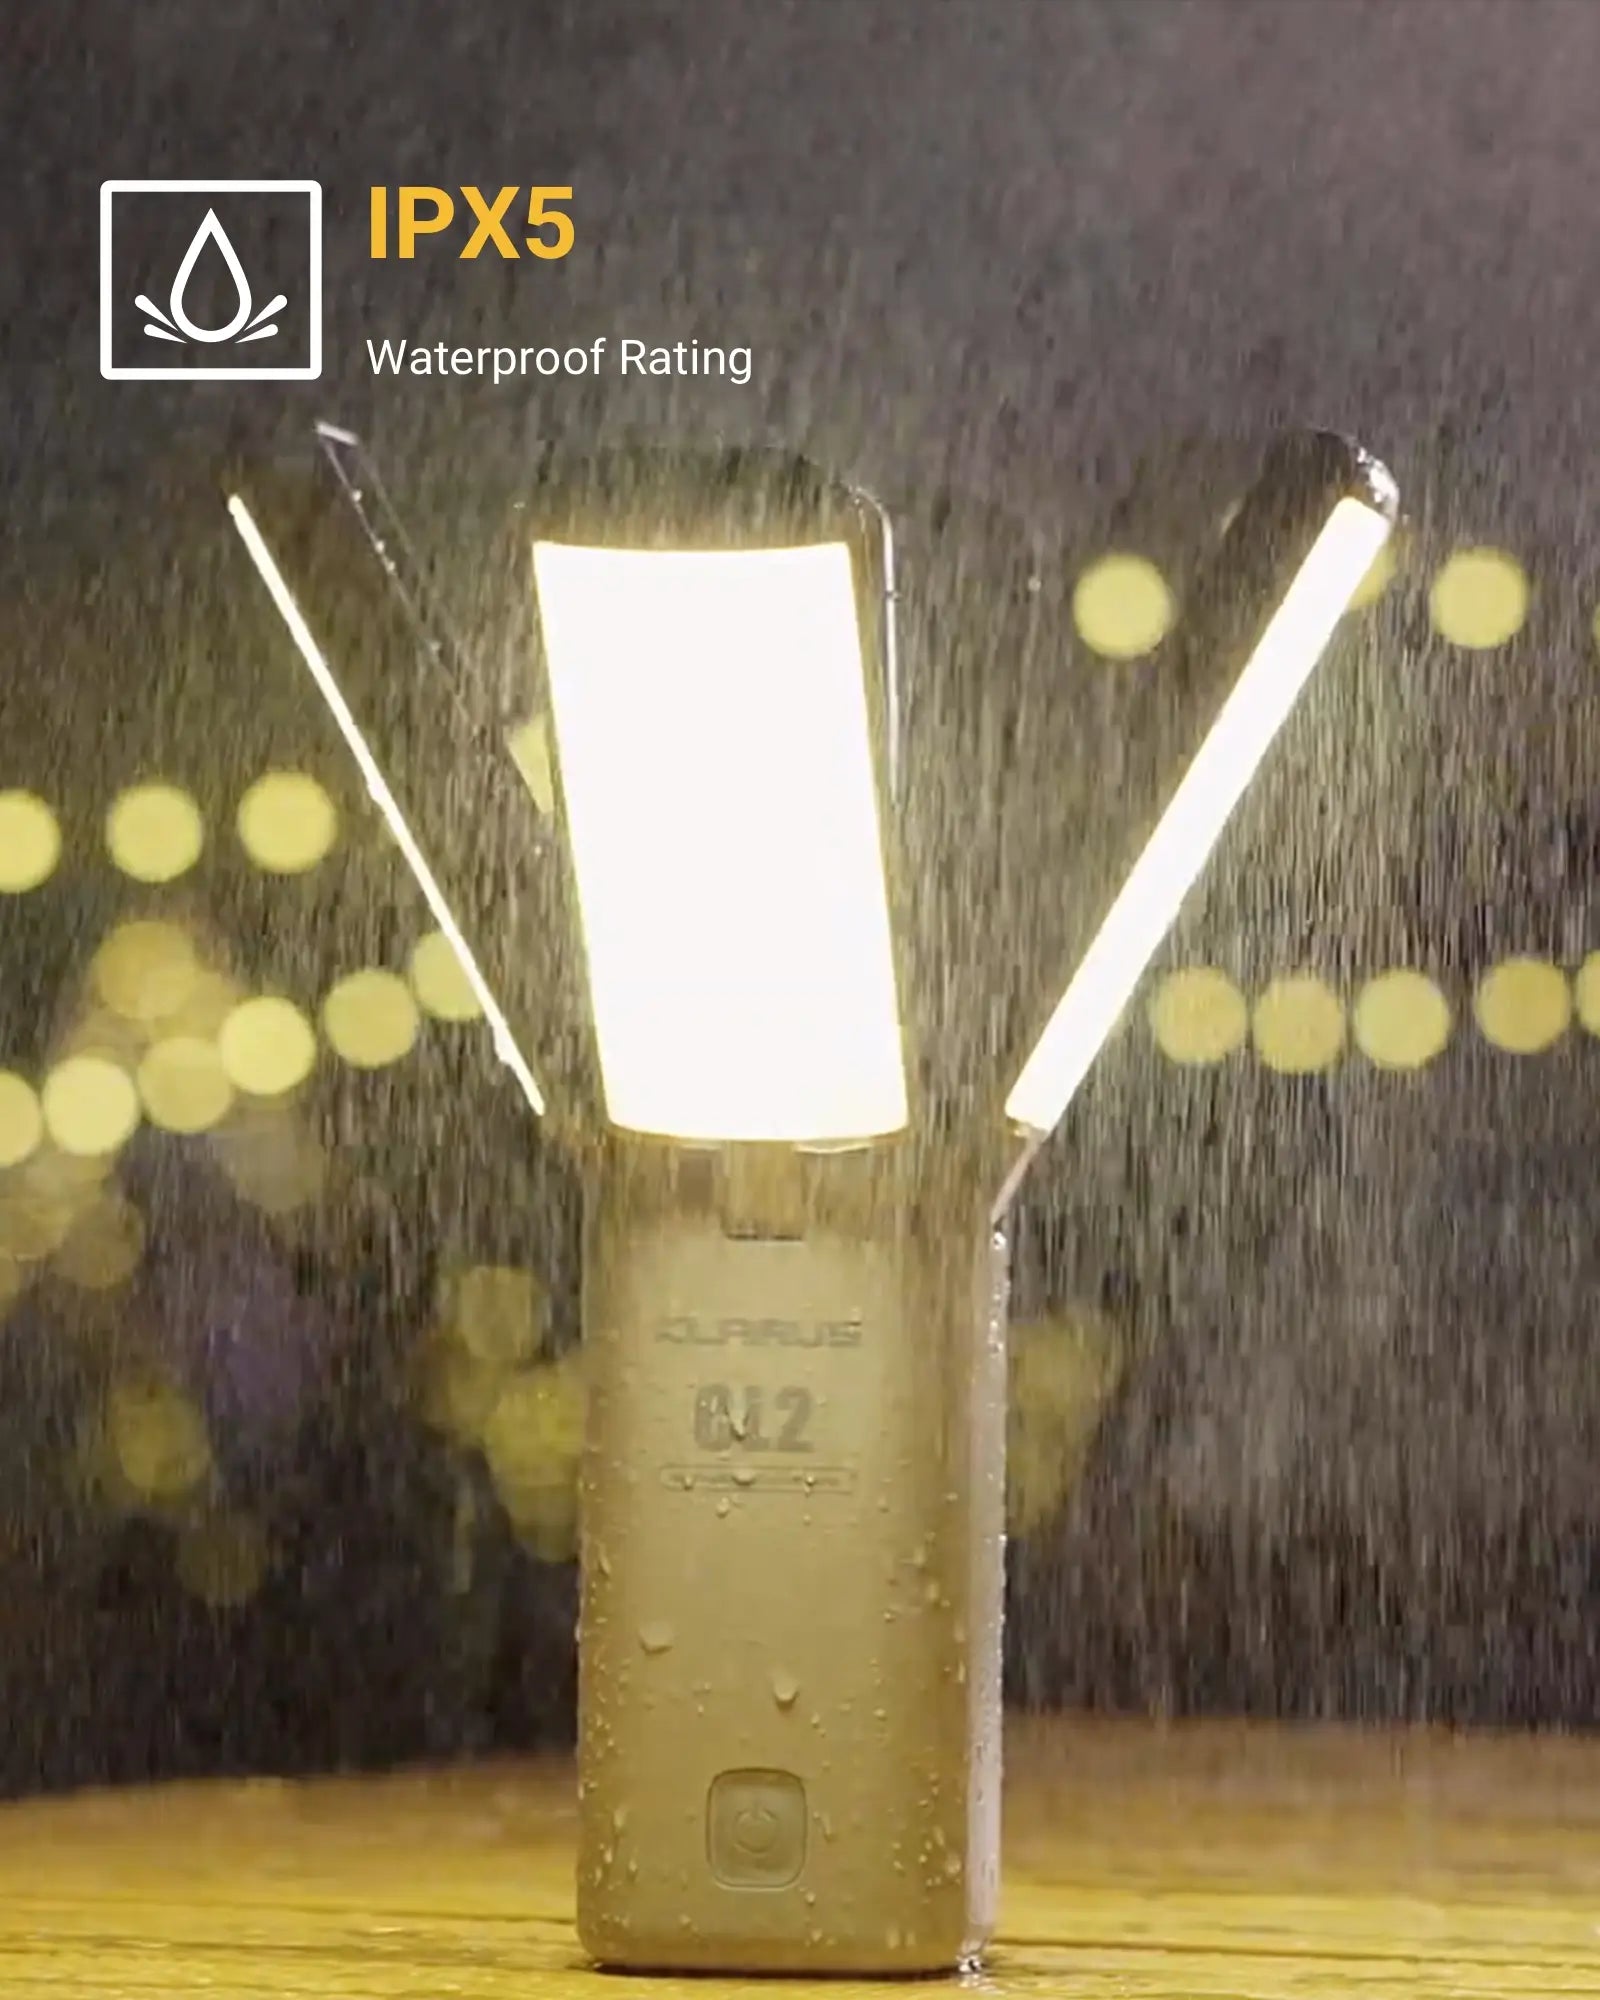 IPX5 waterproof